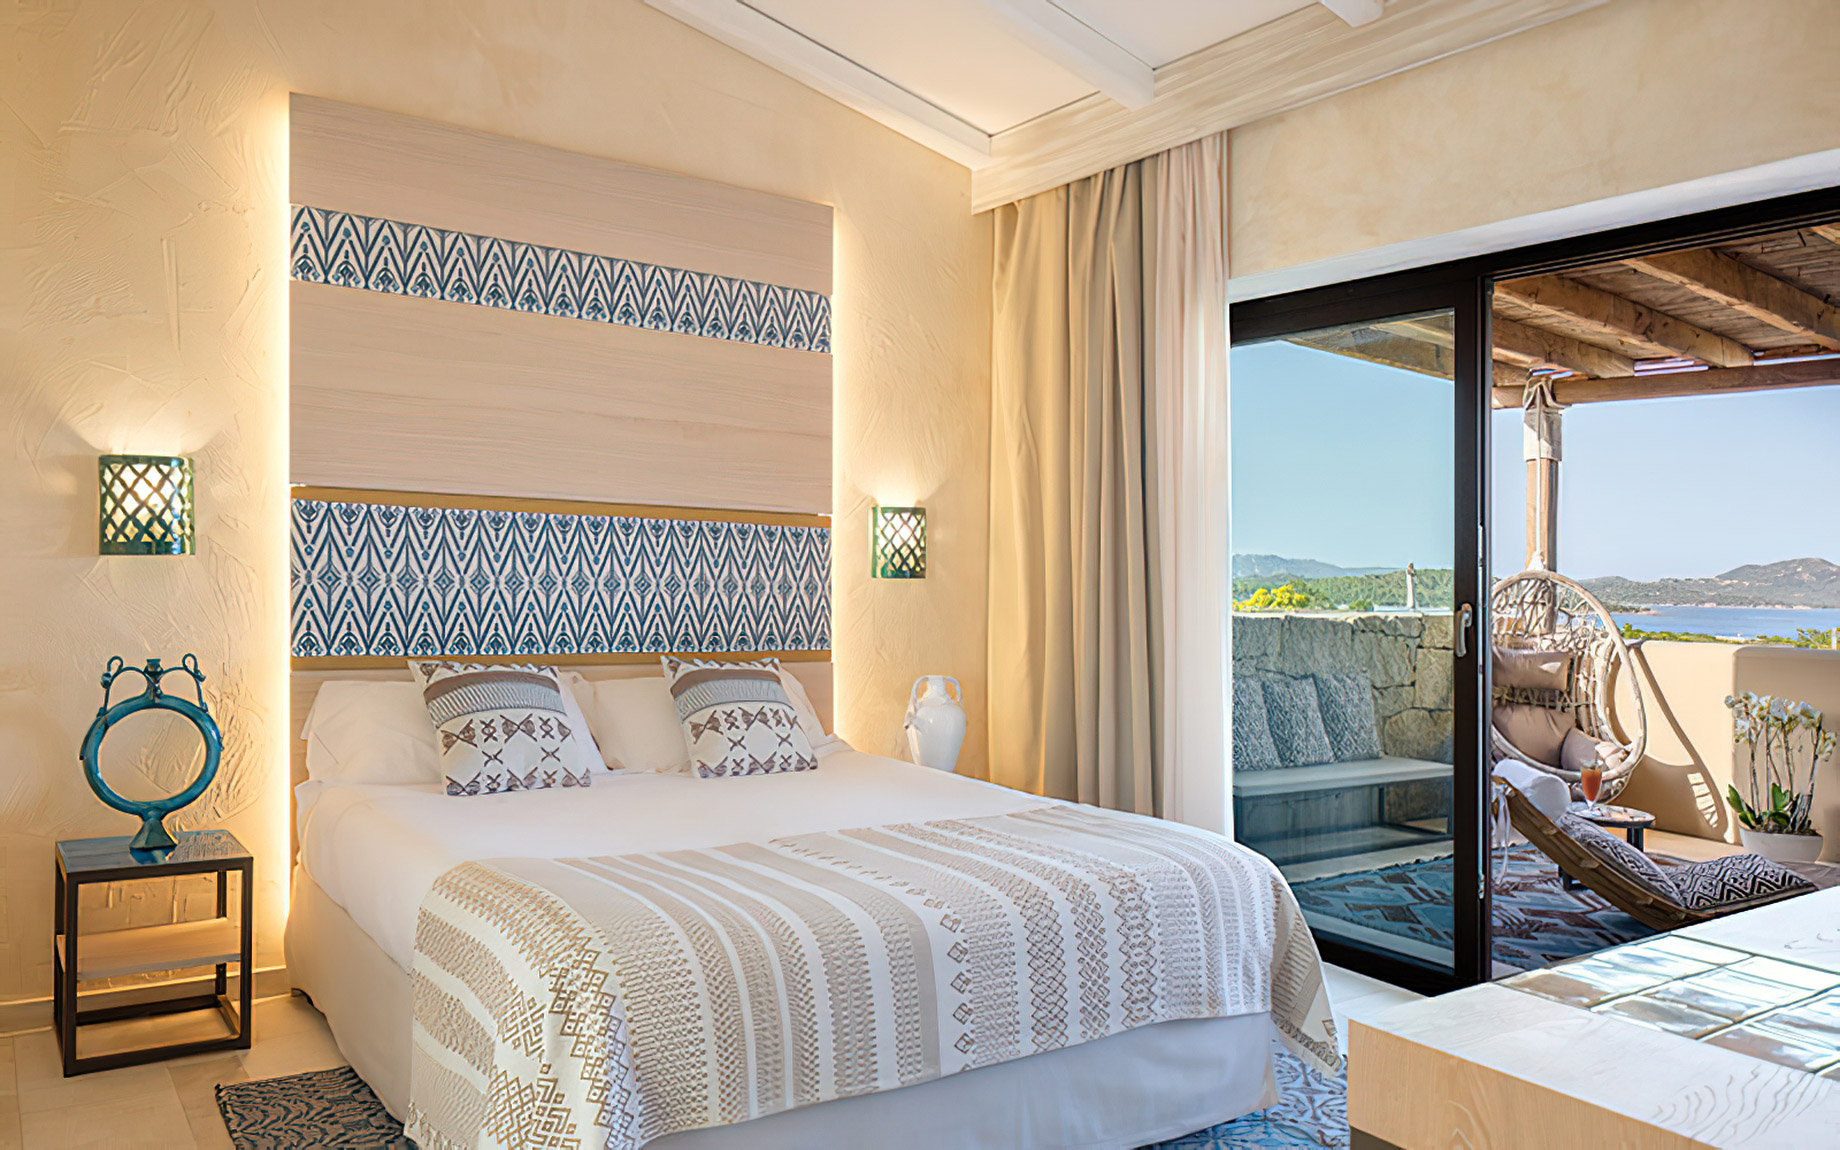 Baglioni Resort Sardinia – San Teodoro, Sardegna, Italy – Maddalena Suite Bedroom